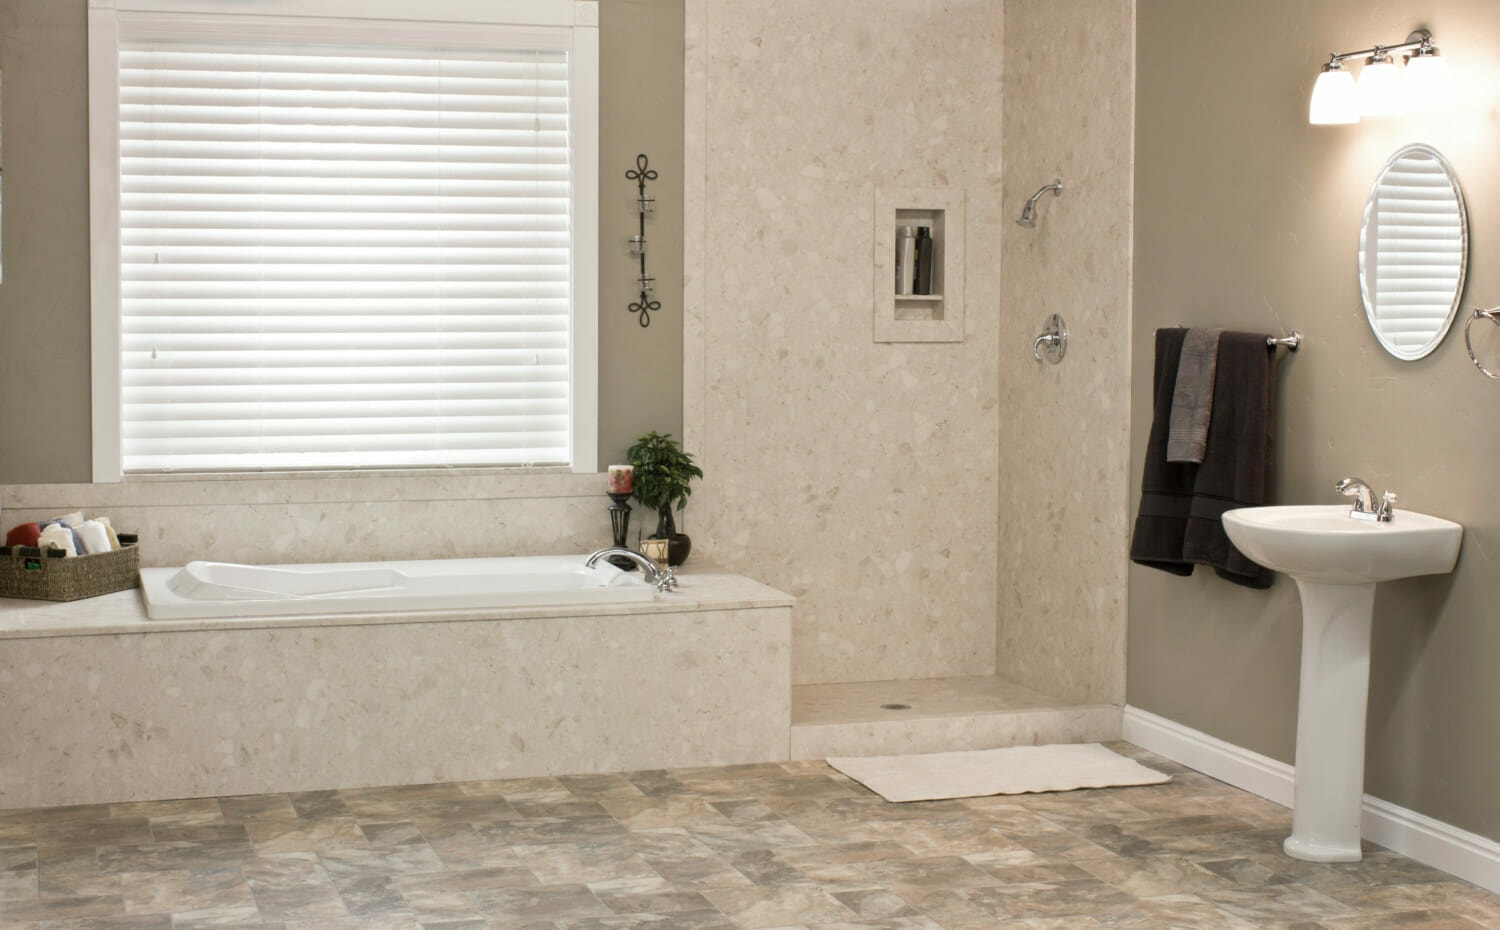 Five Star Bath Solutions of Calgary Lifetime Warranty, Waterproof for life